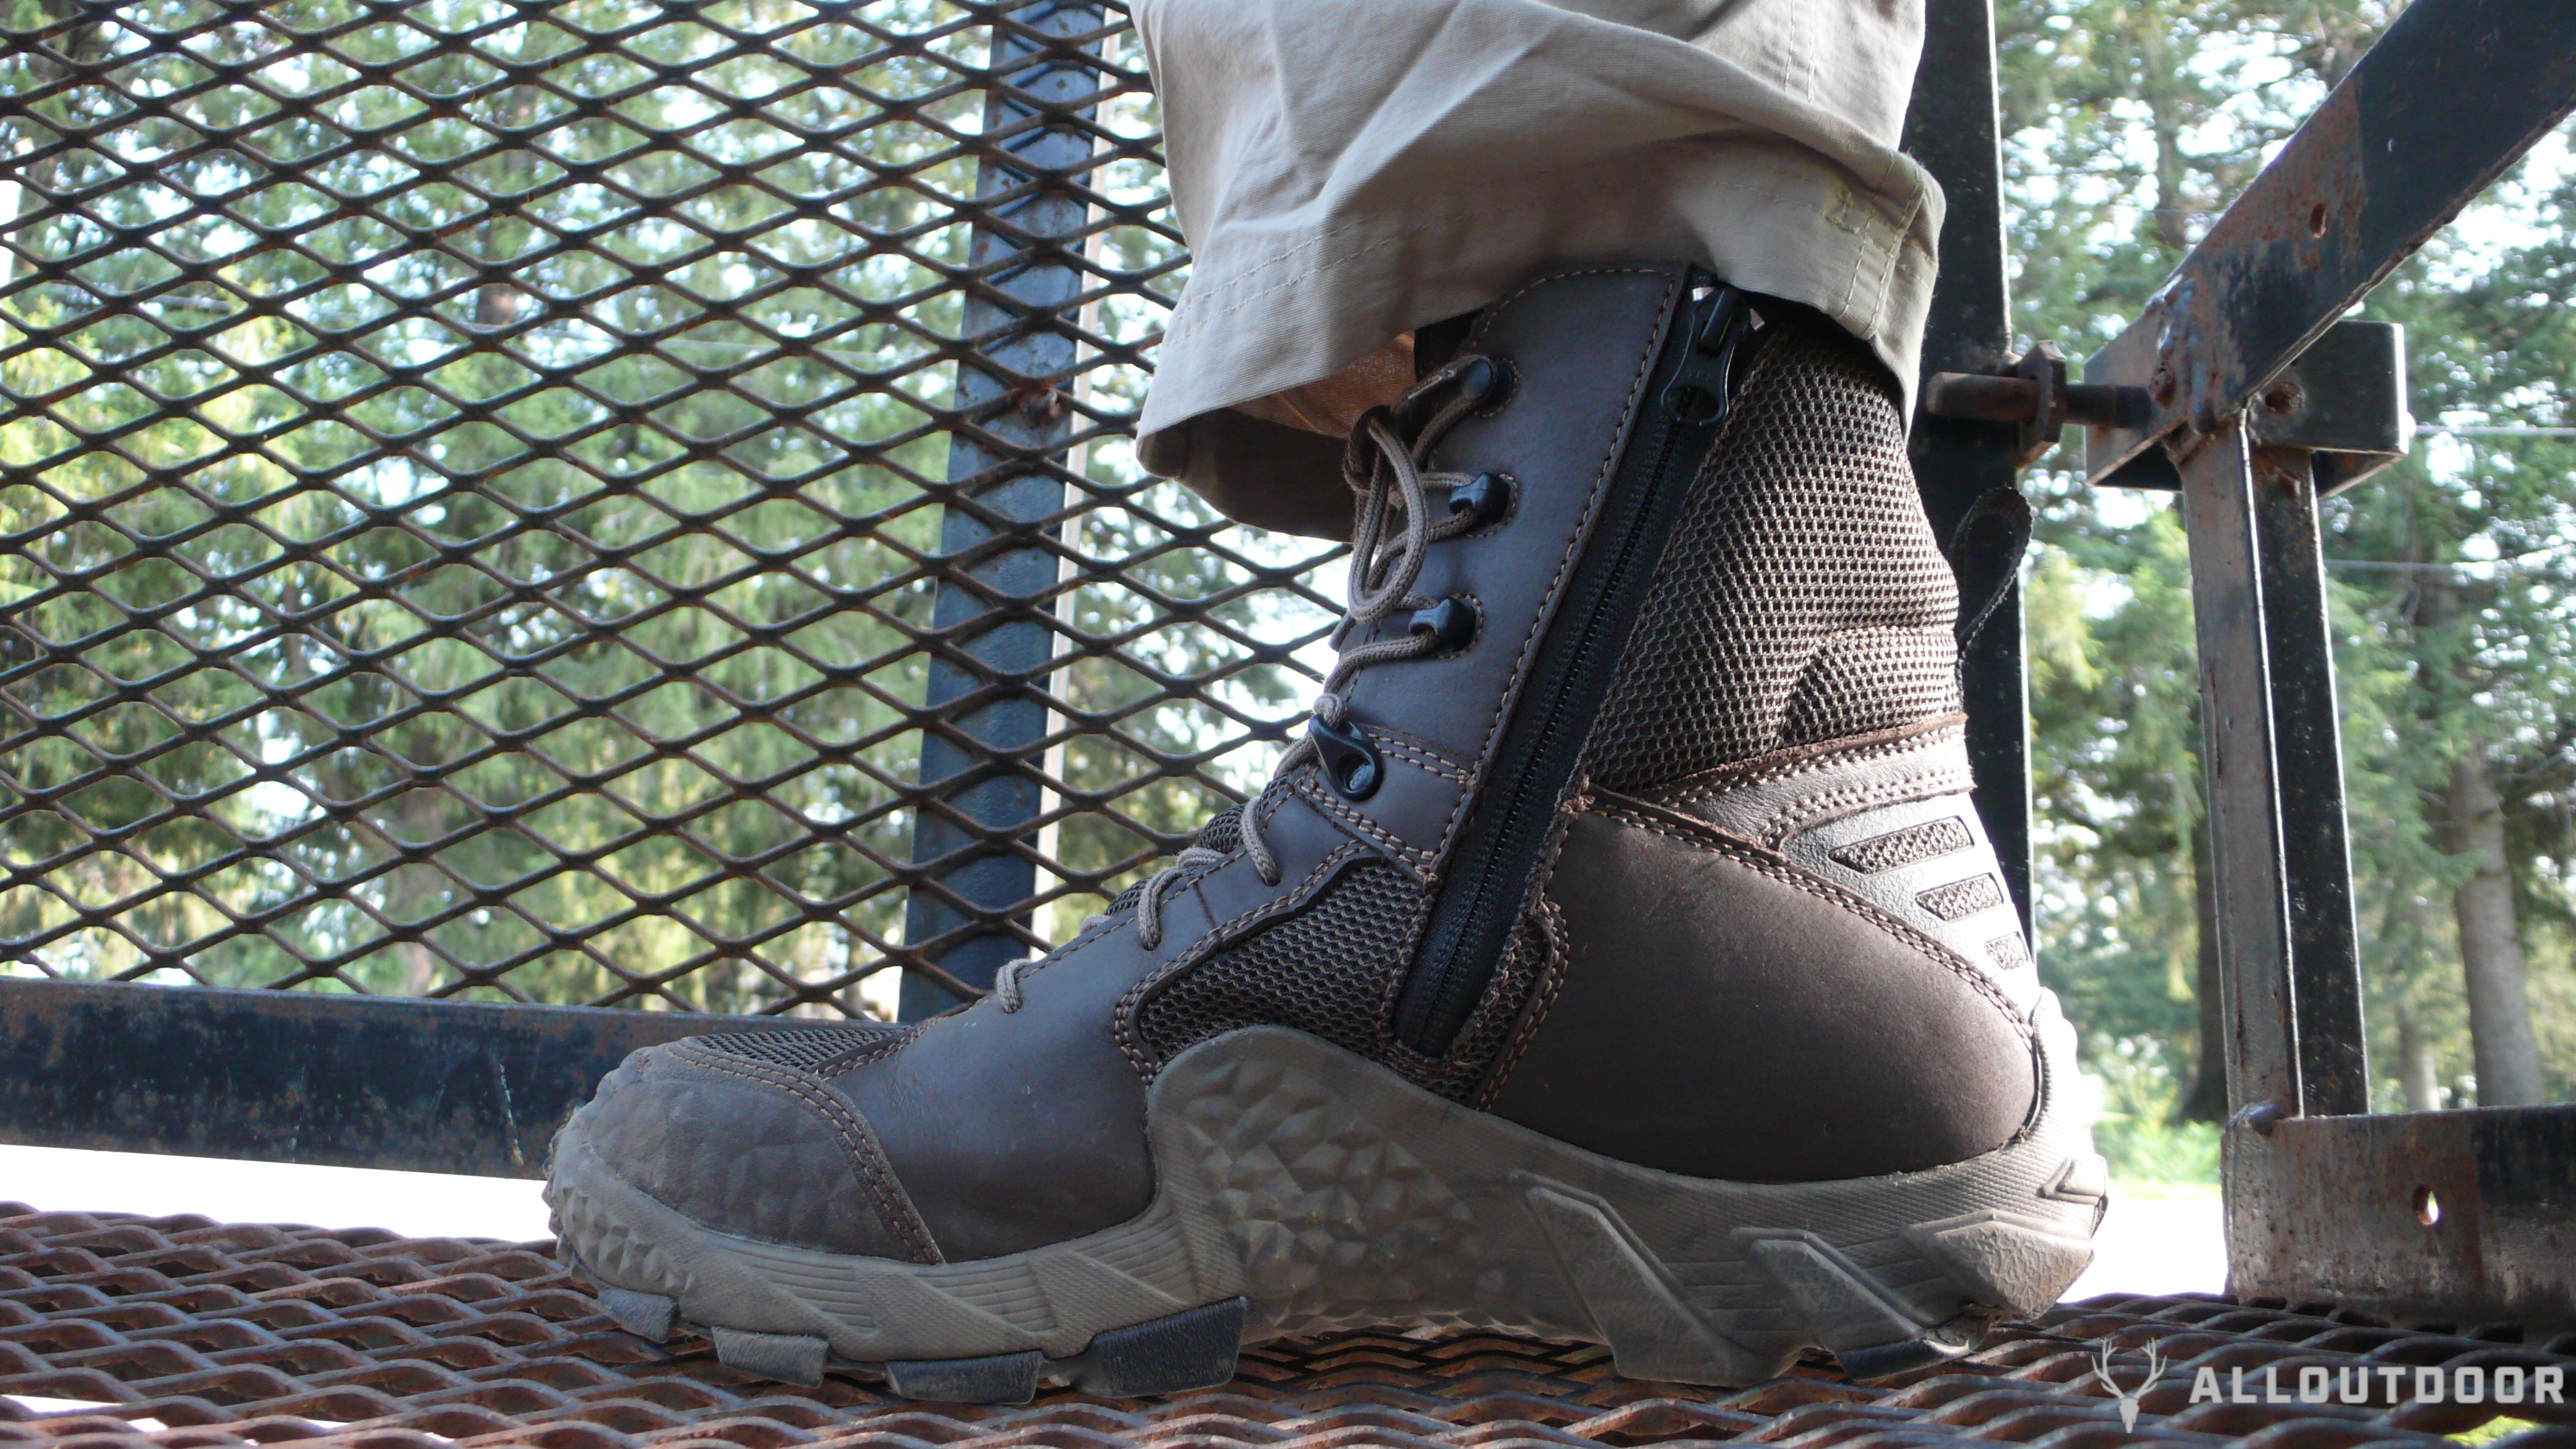 VaprTrek boots from Irish Setter